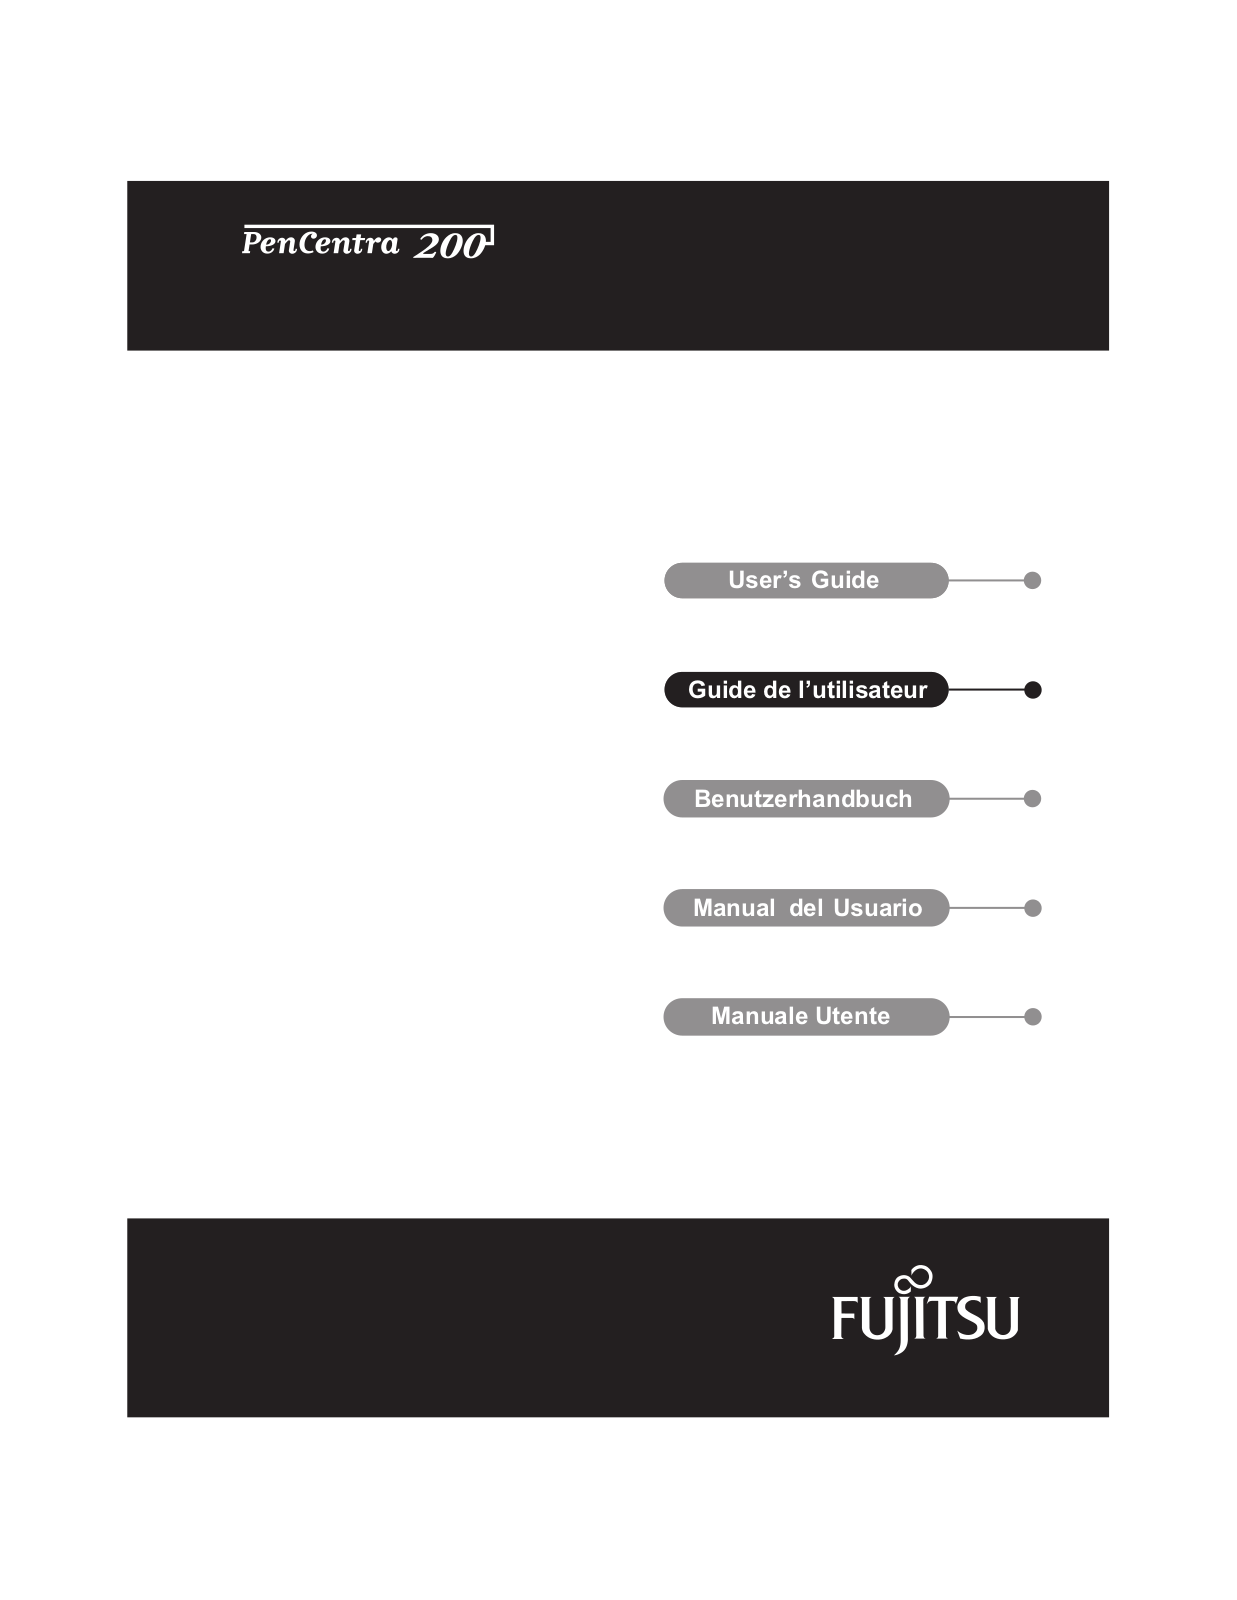 FUJITSU 200 User Manual